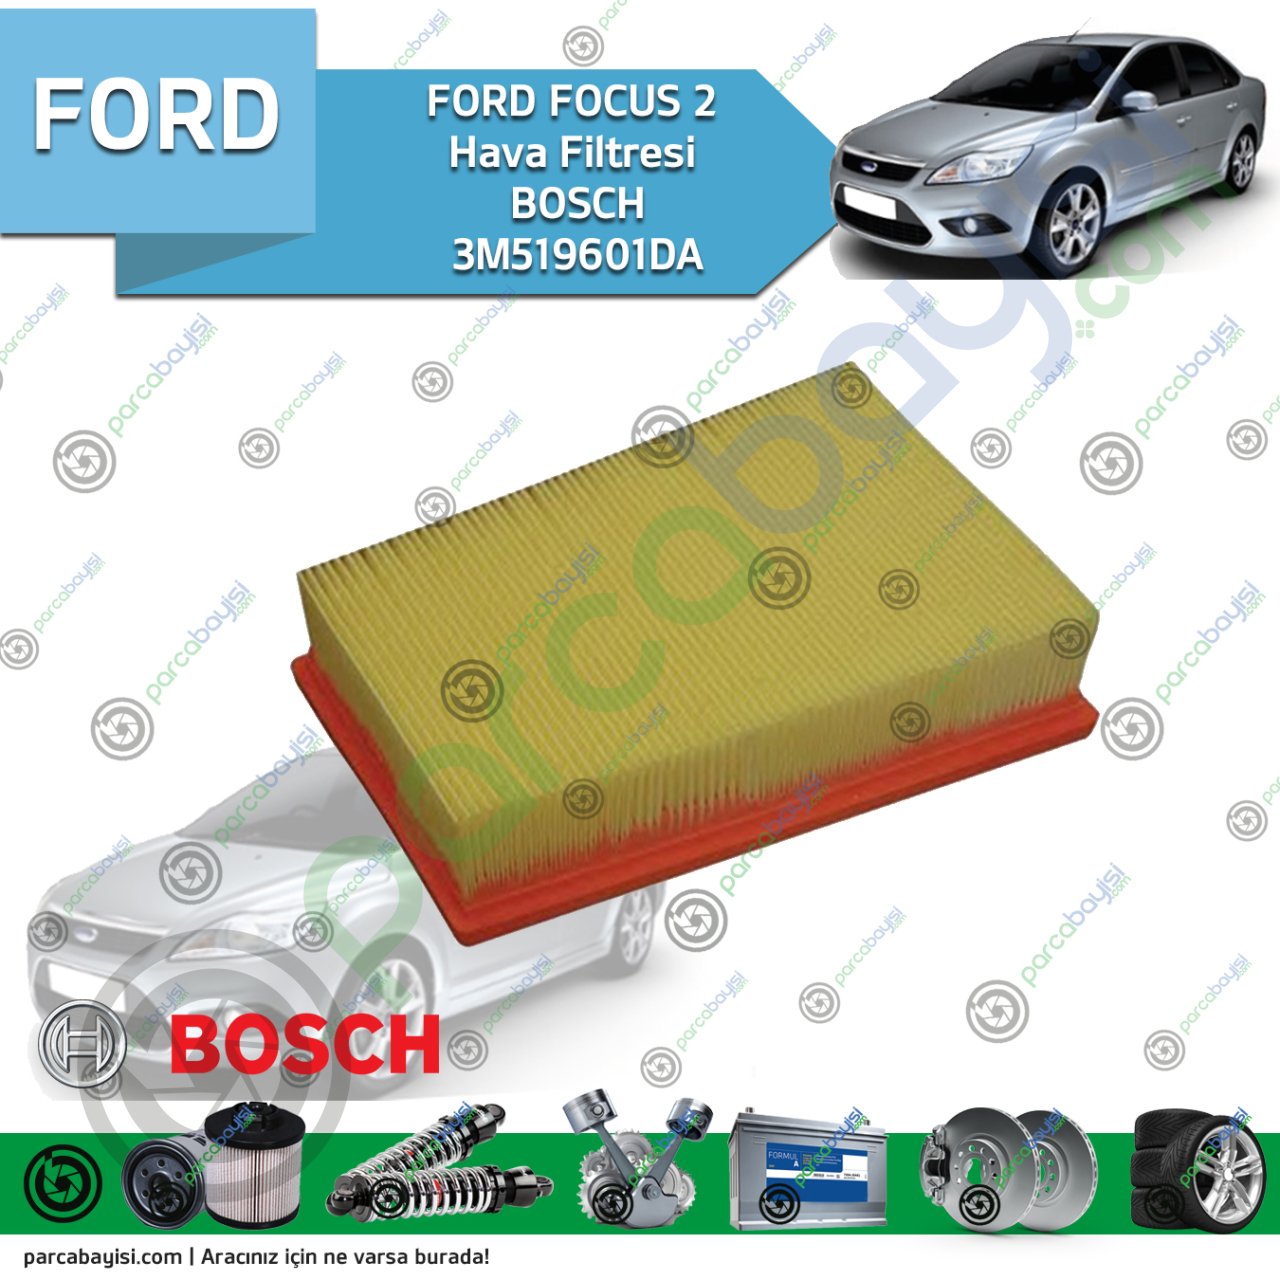 Ford Focus 2 Hava Filtresi 3M519601Da Bosch